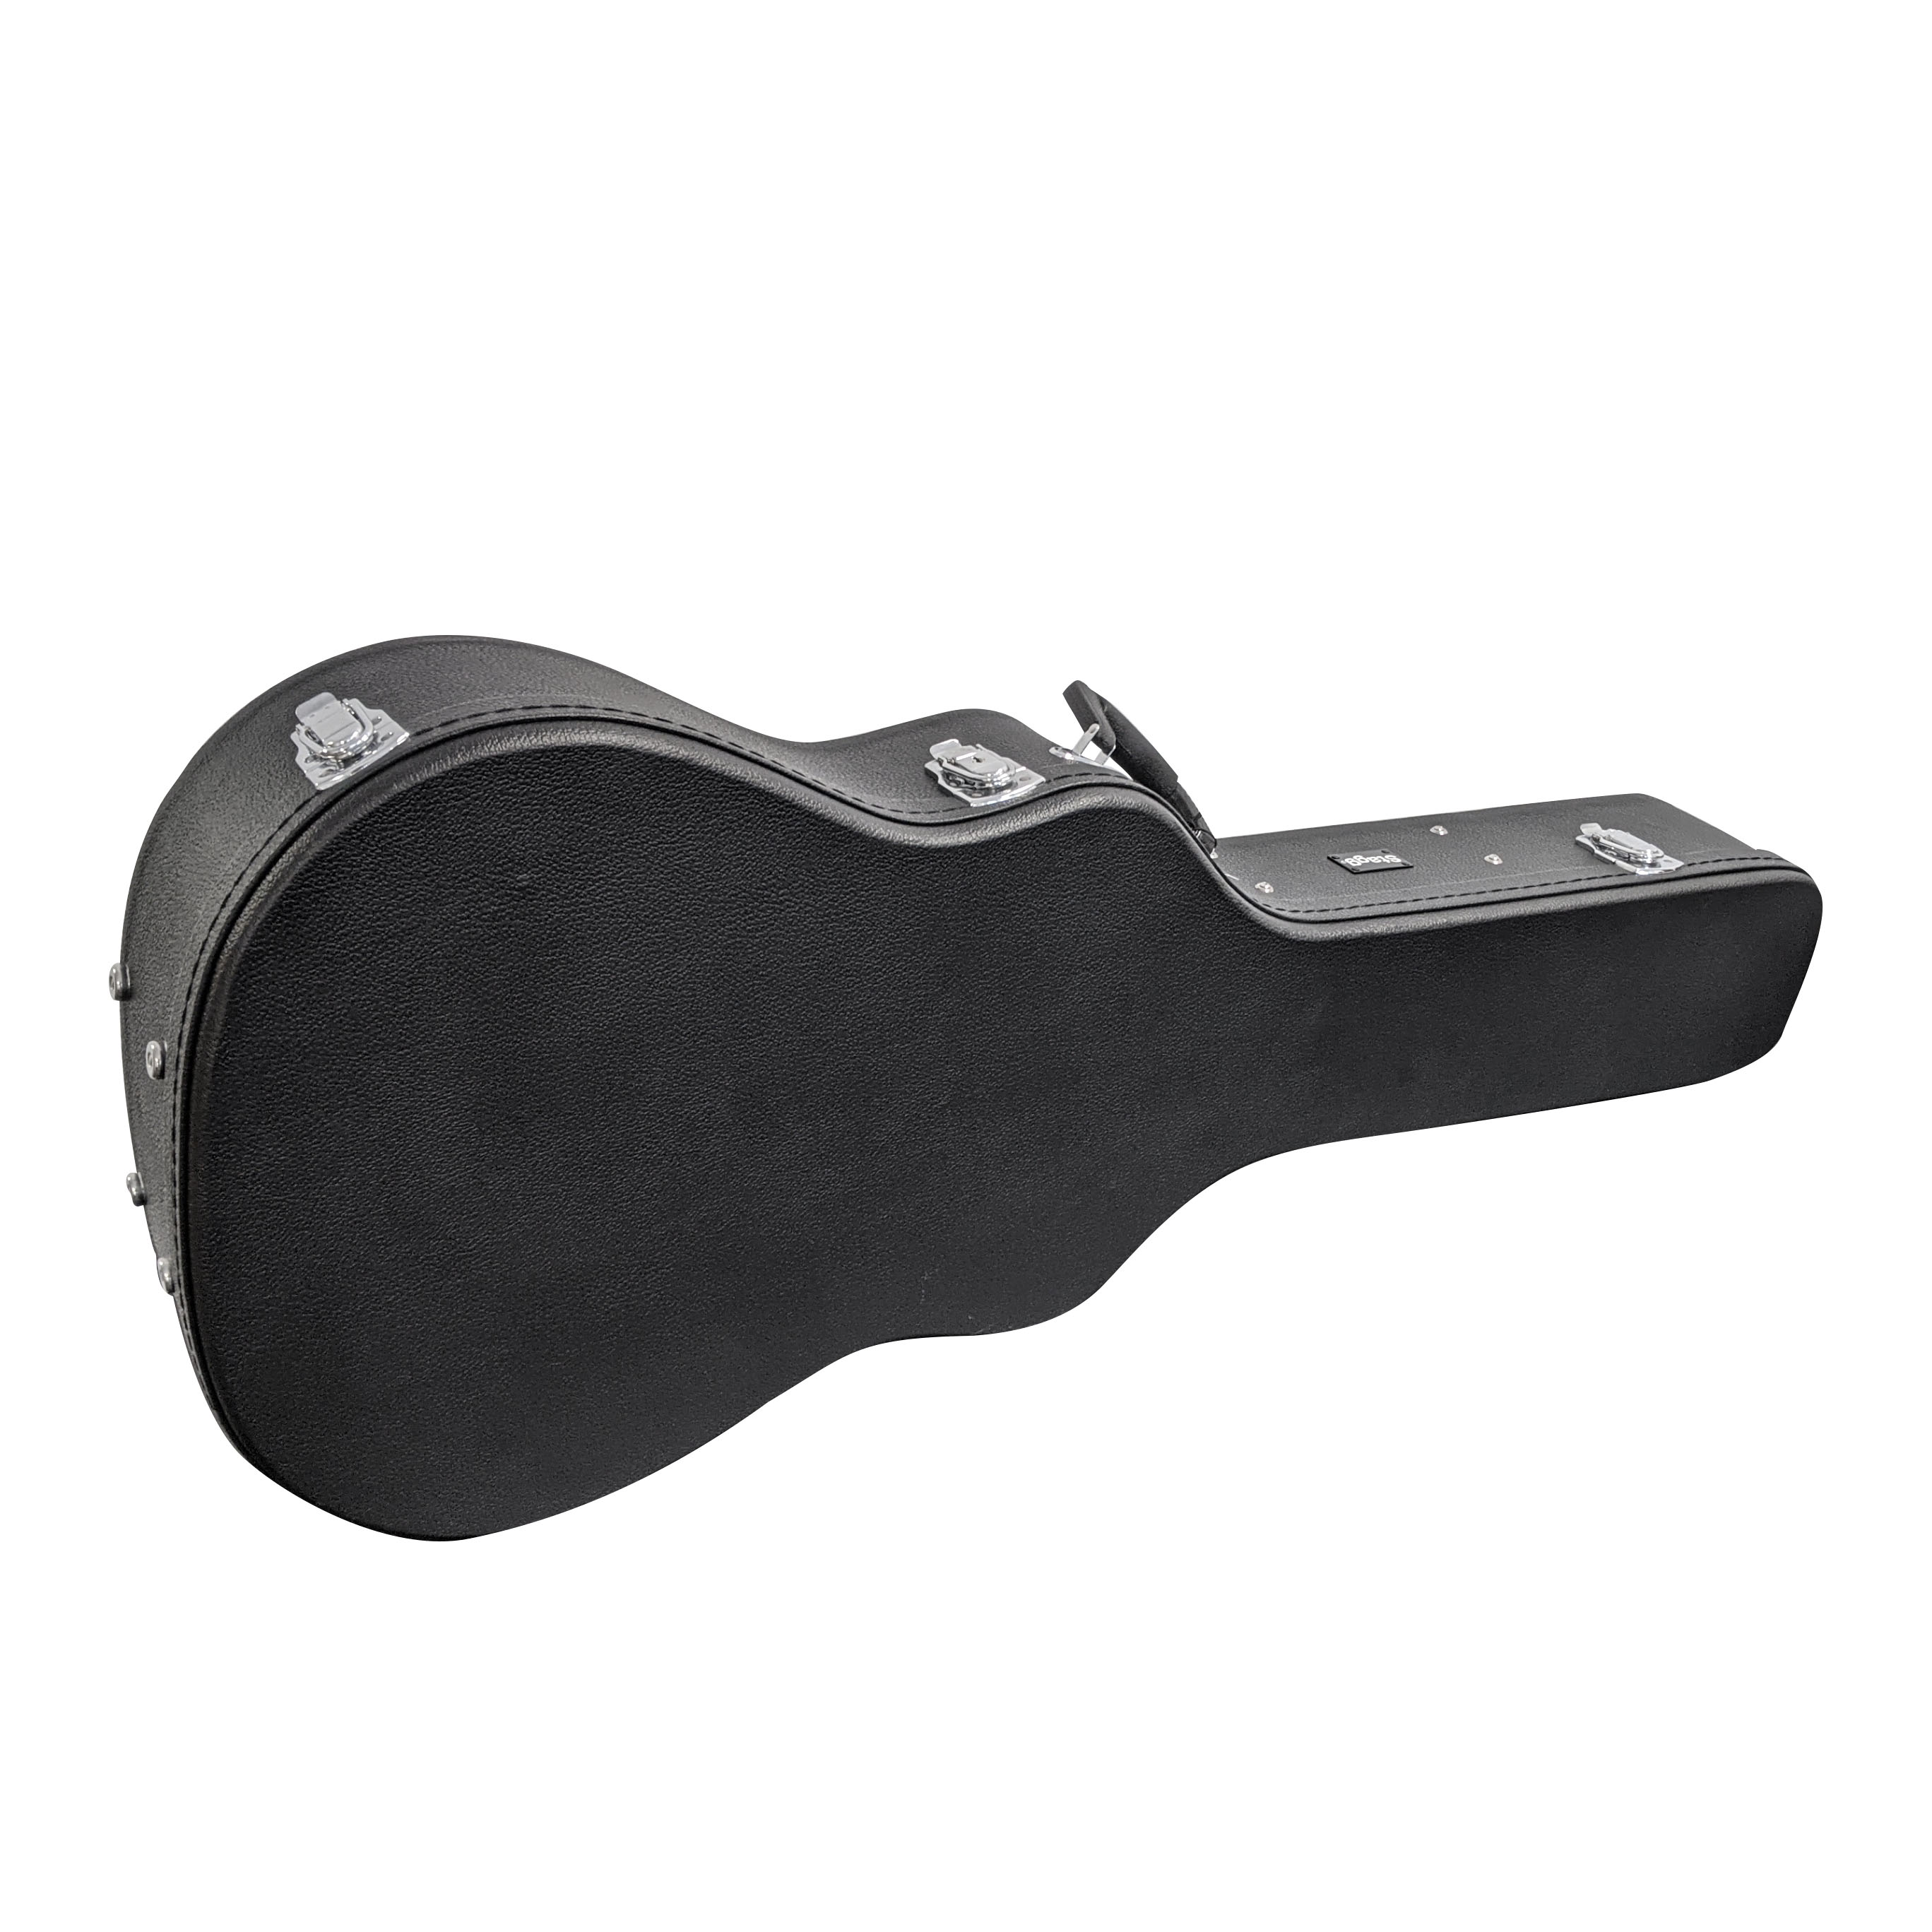 Stagg GCA-W BK, tvarovaný kufr pro akustickou kytaru